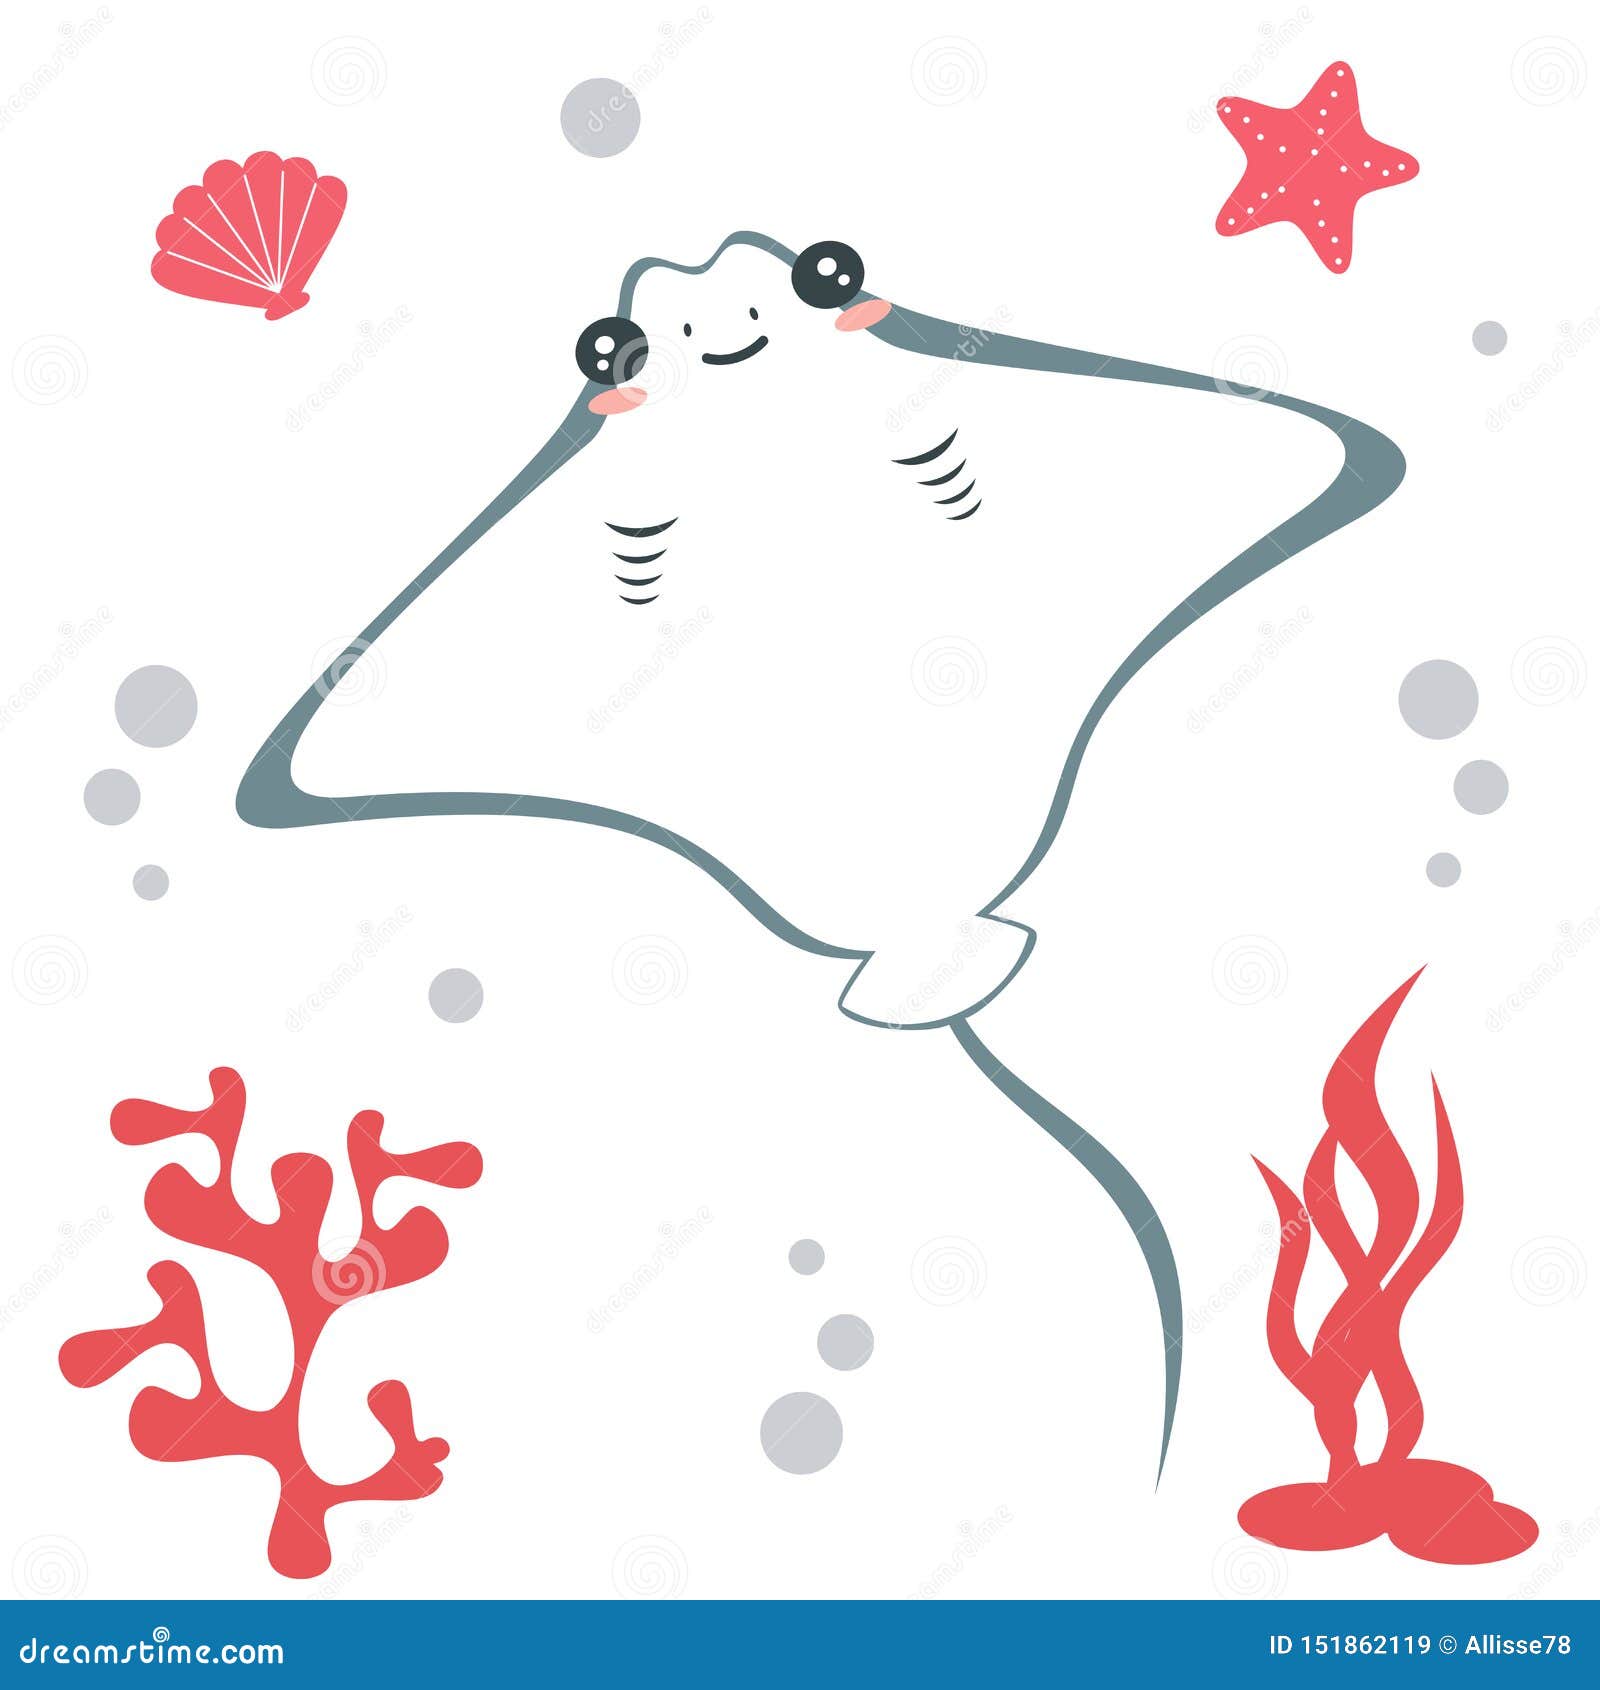 Download Cute Cartoon Stingray Fish Vector Illustration Stock ...